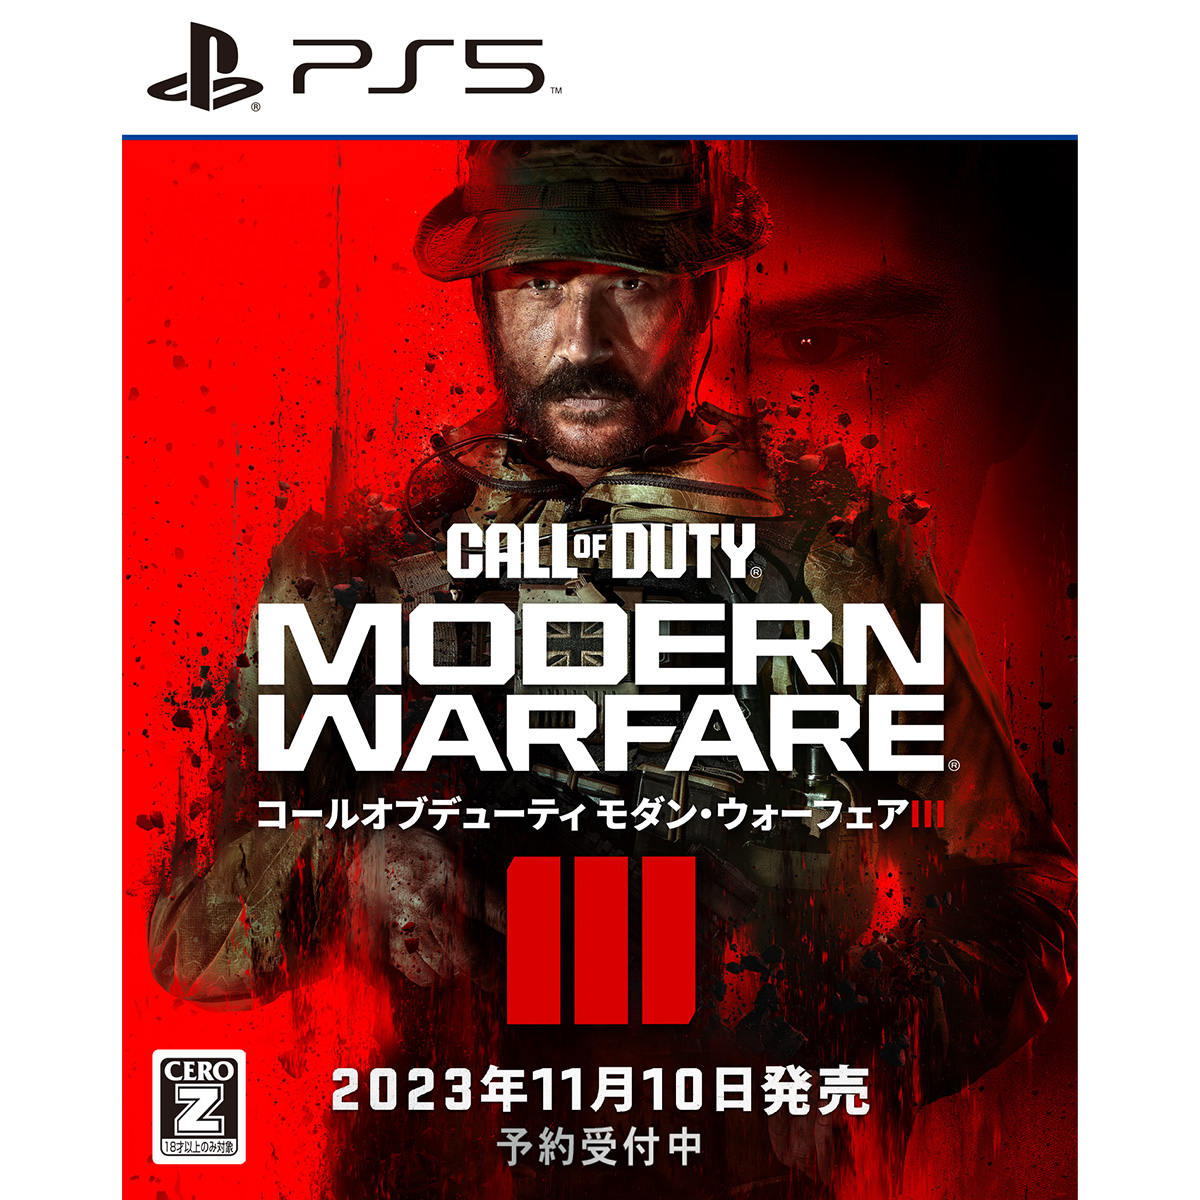 ［PS5］［メール便］［新品］Call of Duty: Modern Warfare III（コール オブ デューティ モダン・ウォーフェア III） COD